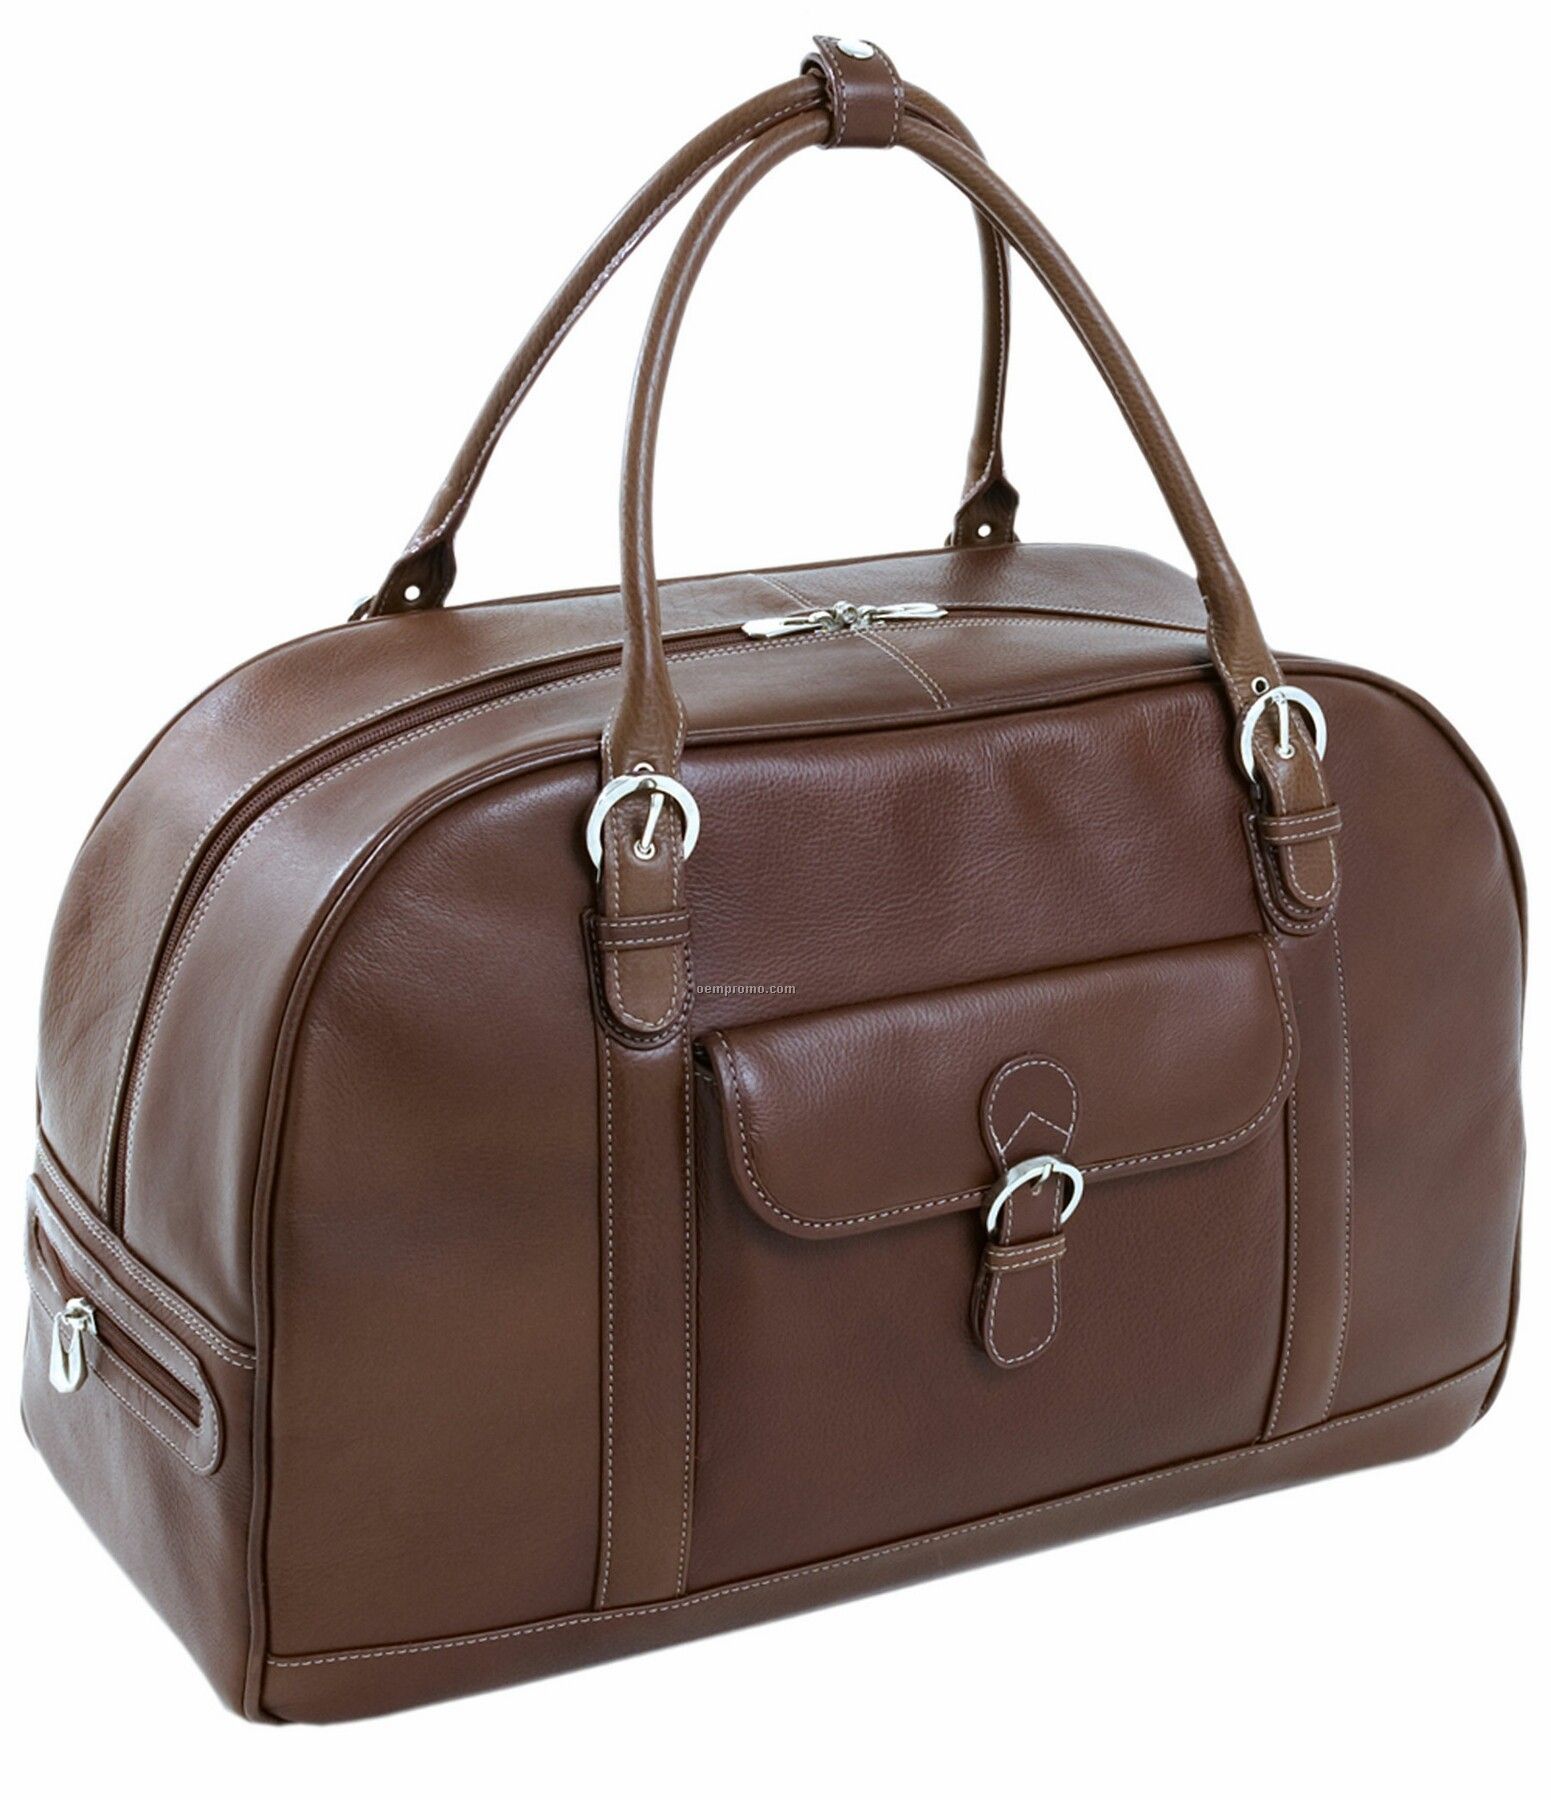 Stalla Leather Duffel Bag - Cognac Brown